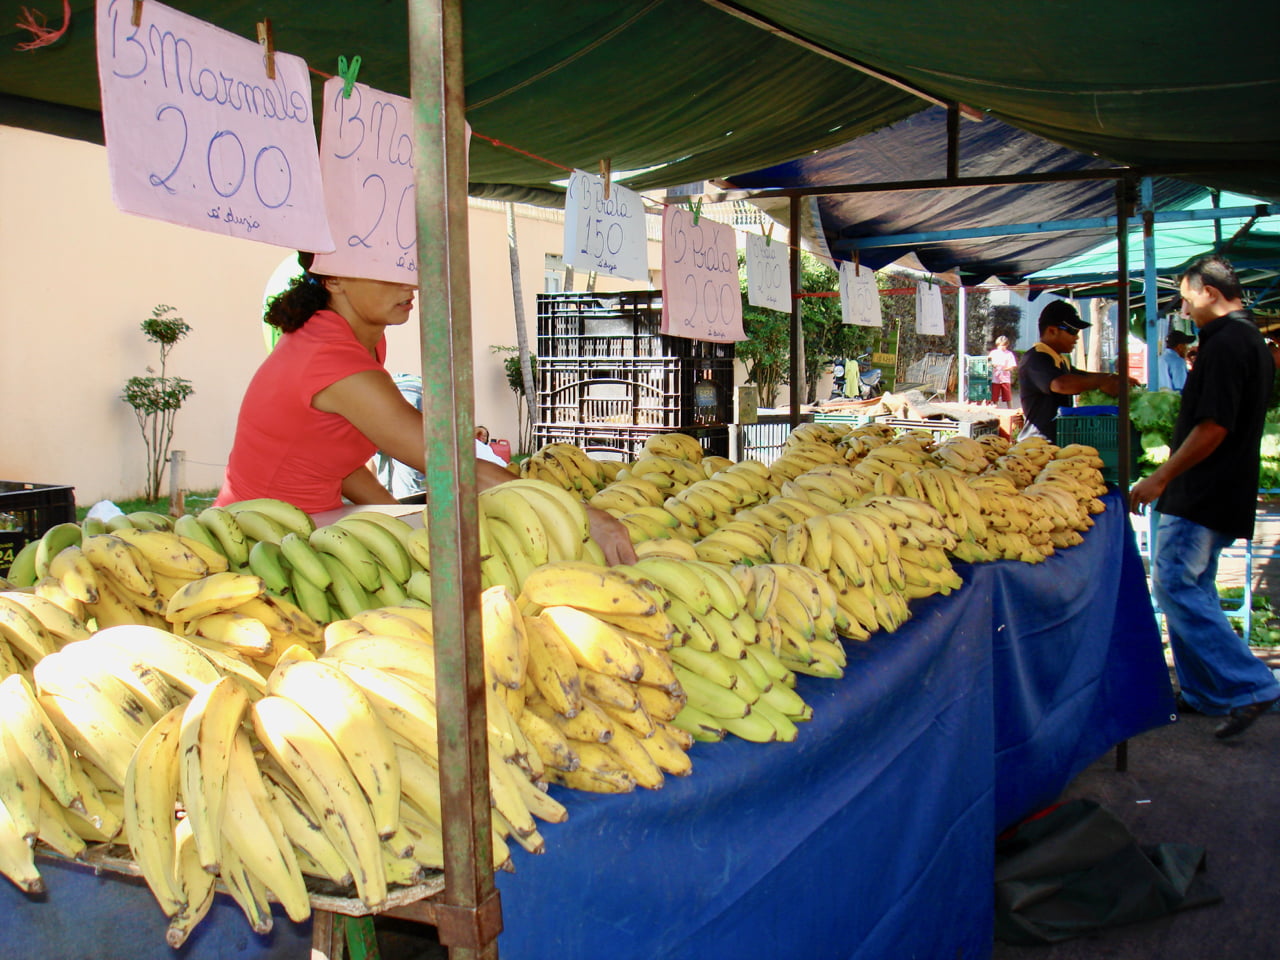 Bananas At A Street Market In Brazil - Feiras